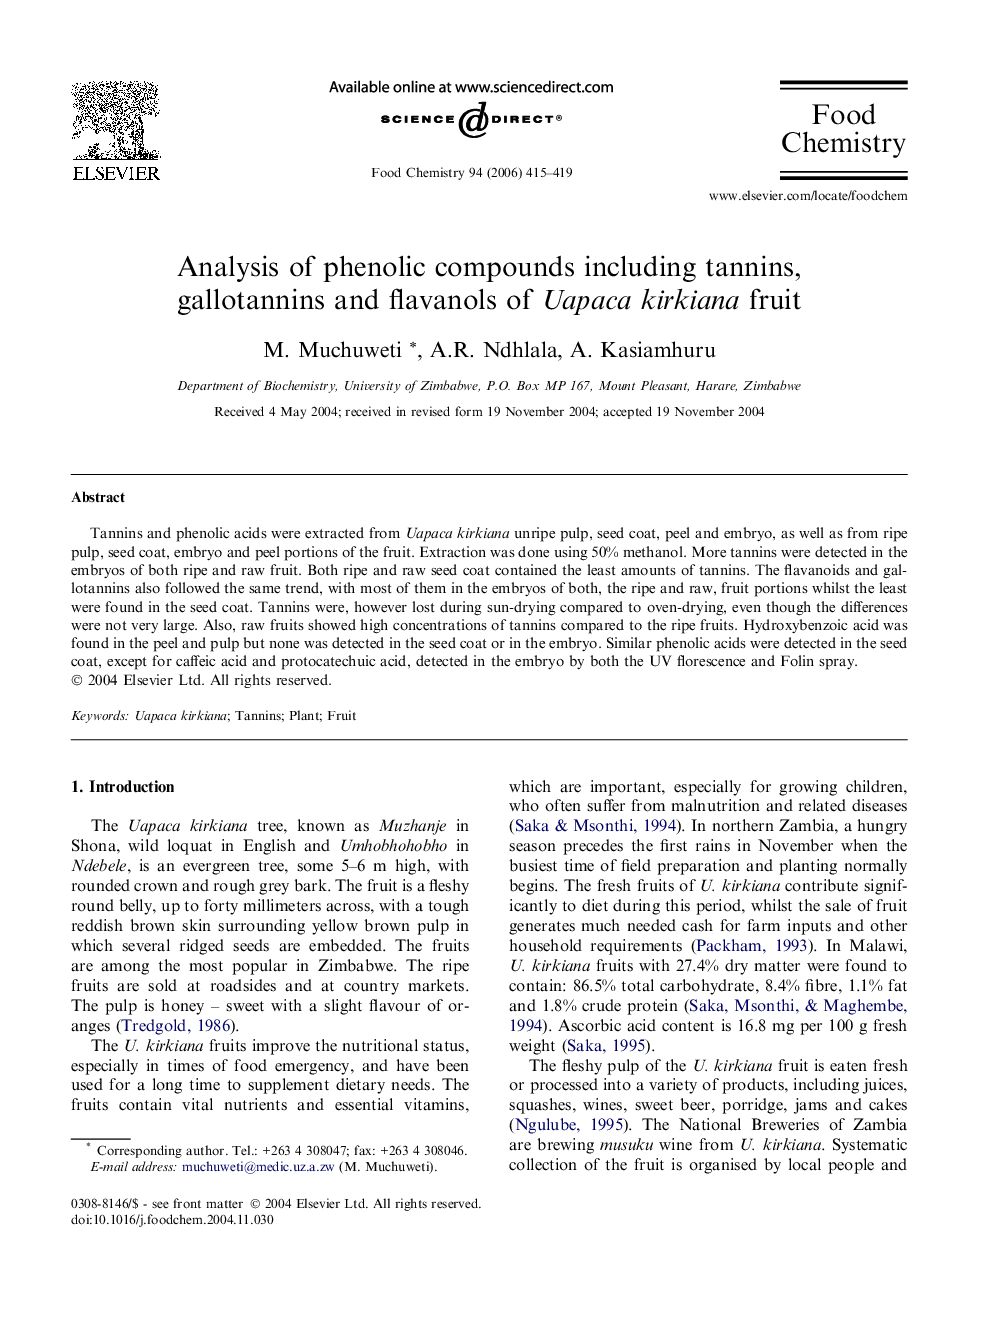 Analysis of phenolic compounds including tannins, gallotannins and flavanols of Uapaca kirkiana fruit